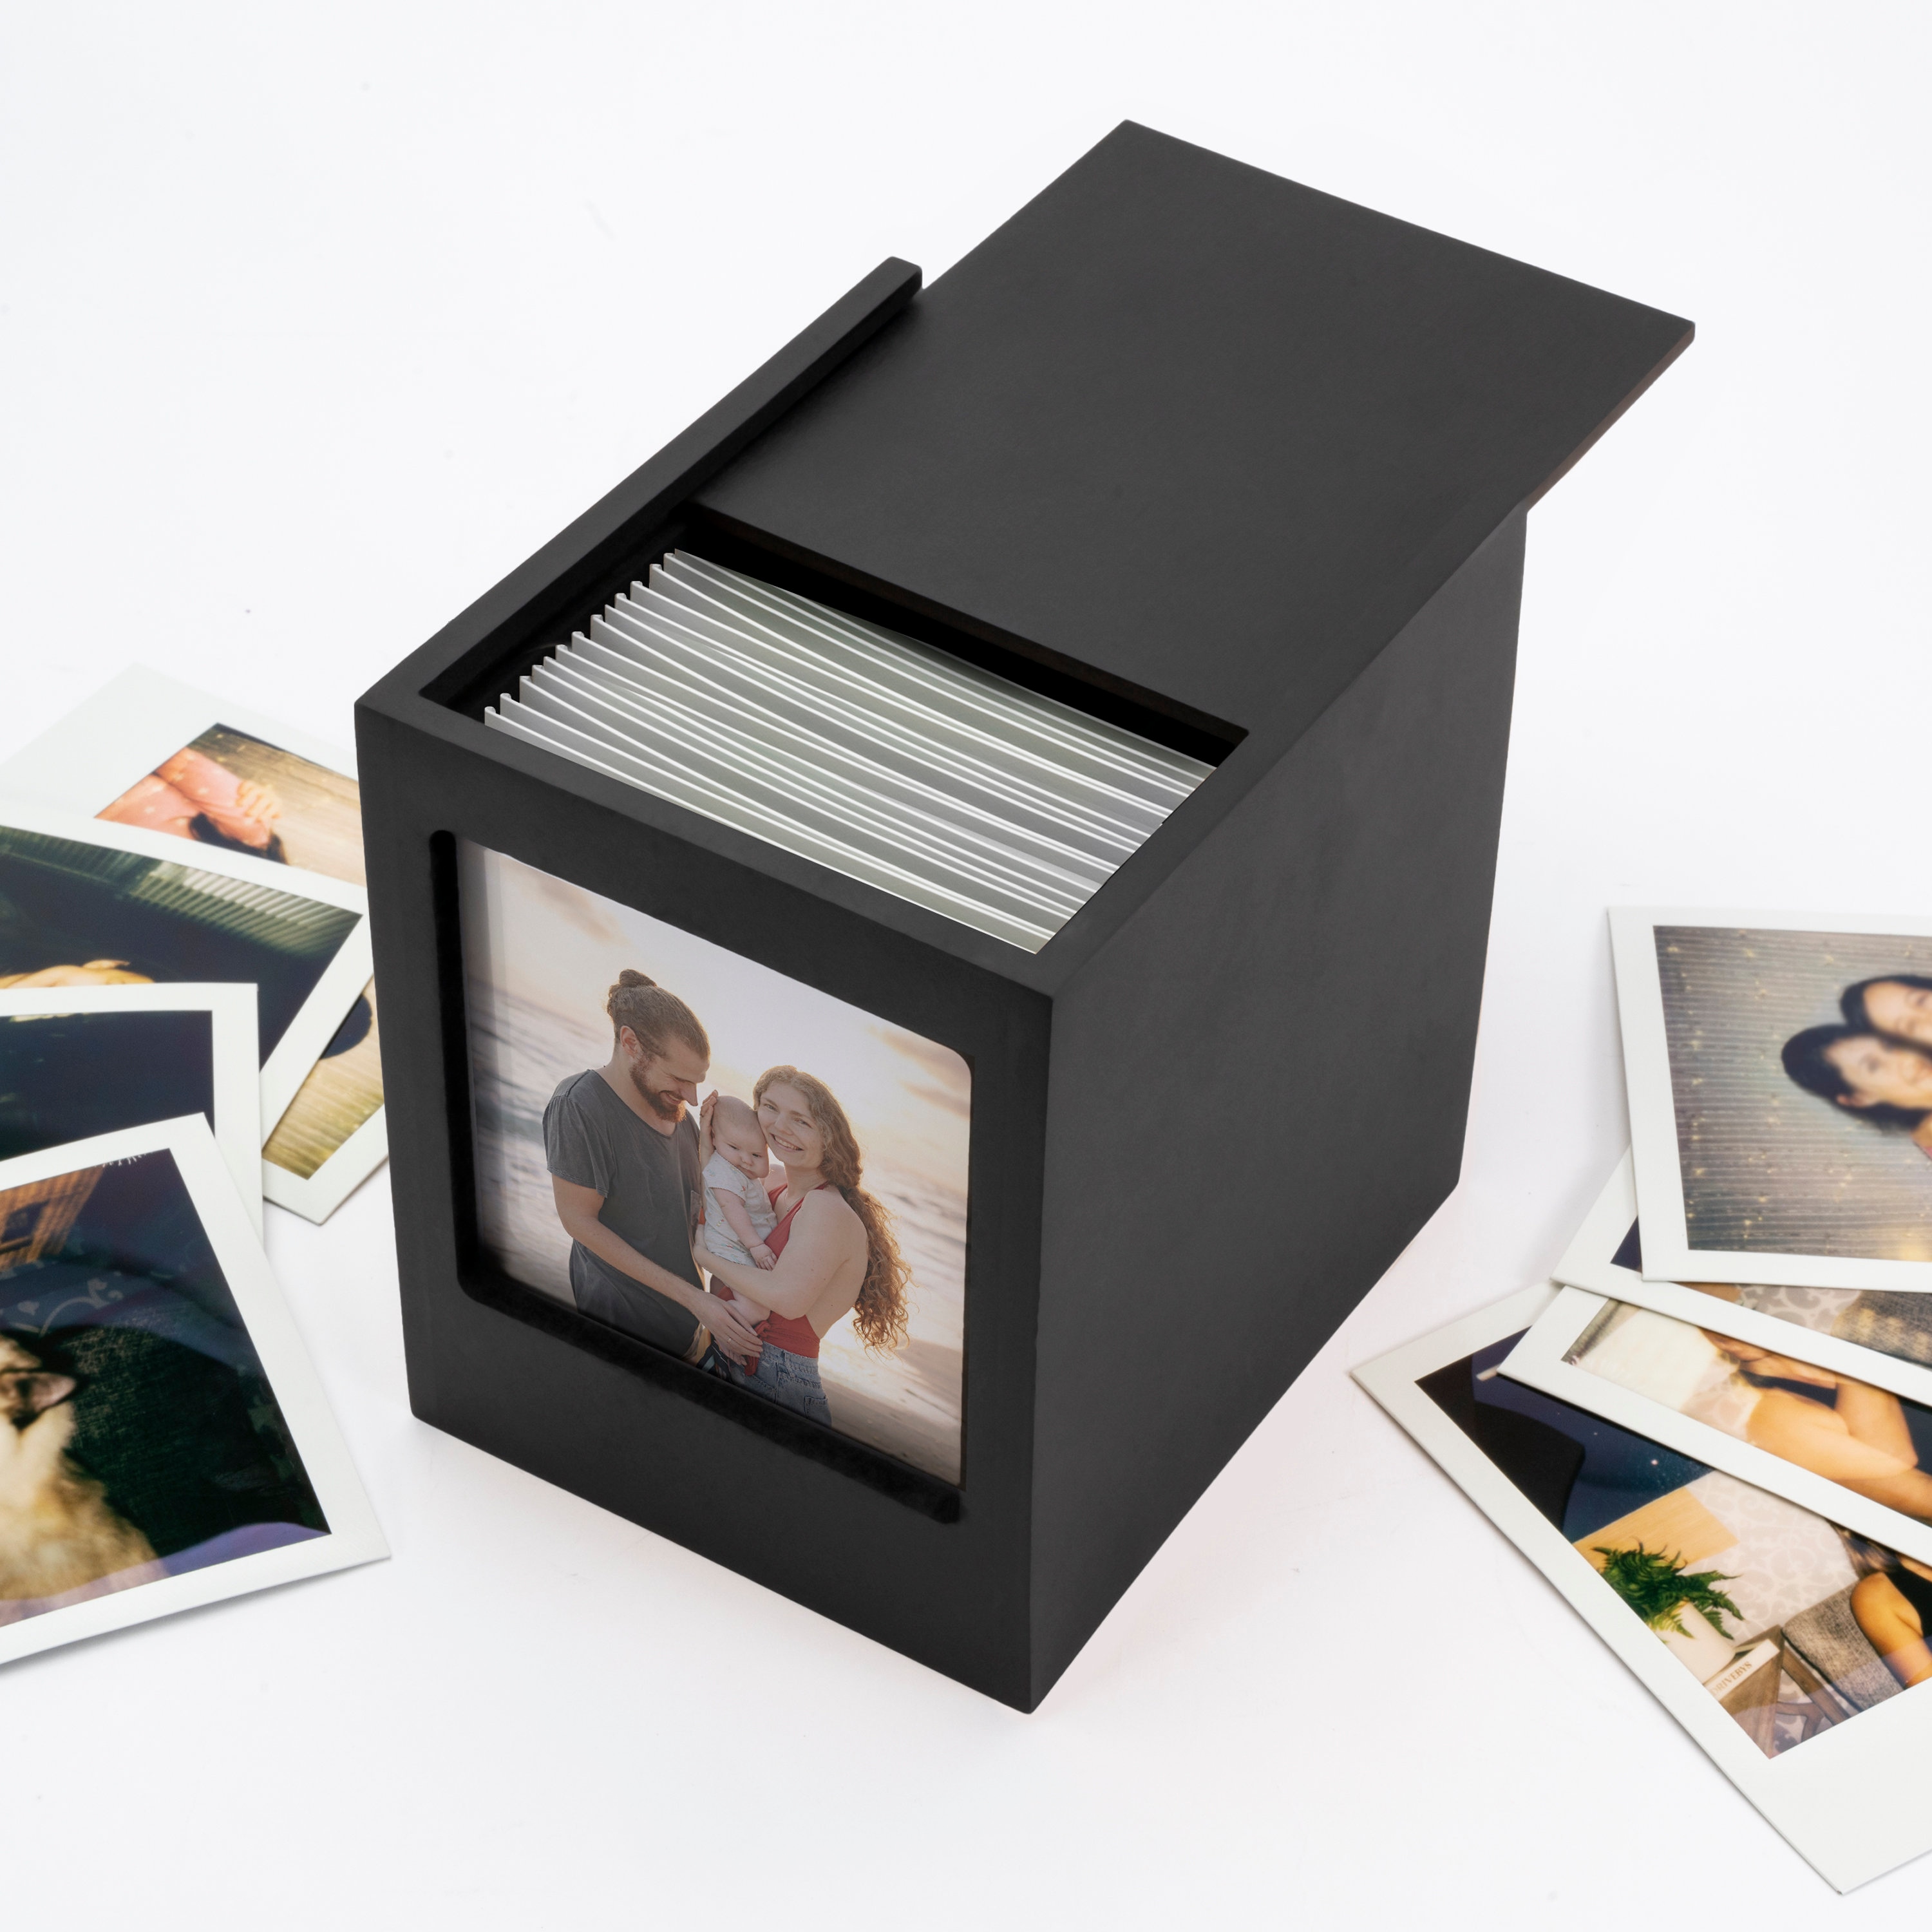 Polaroid Color Film for 600 Color Frame | Pink Album Holds 32 Photos -  Starter Kit!